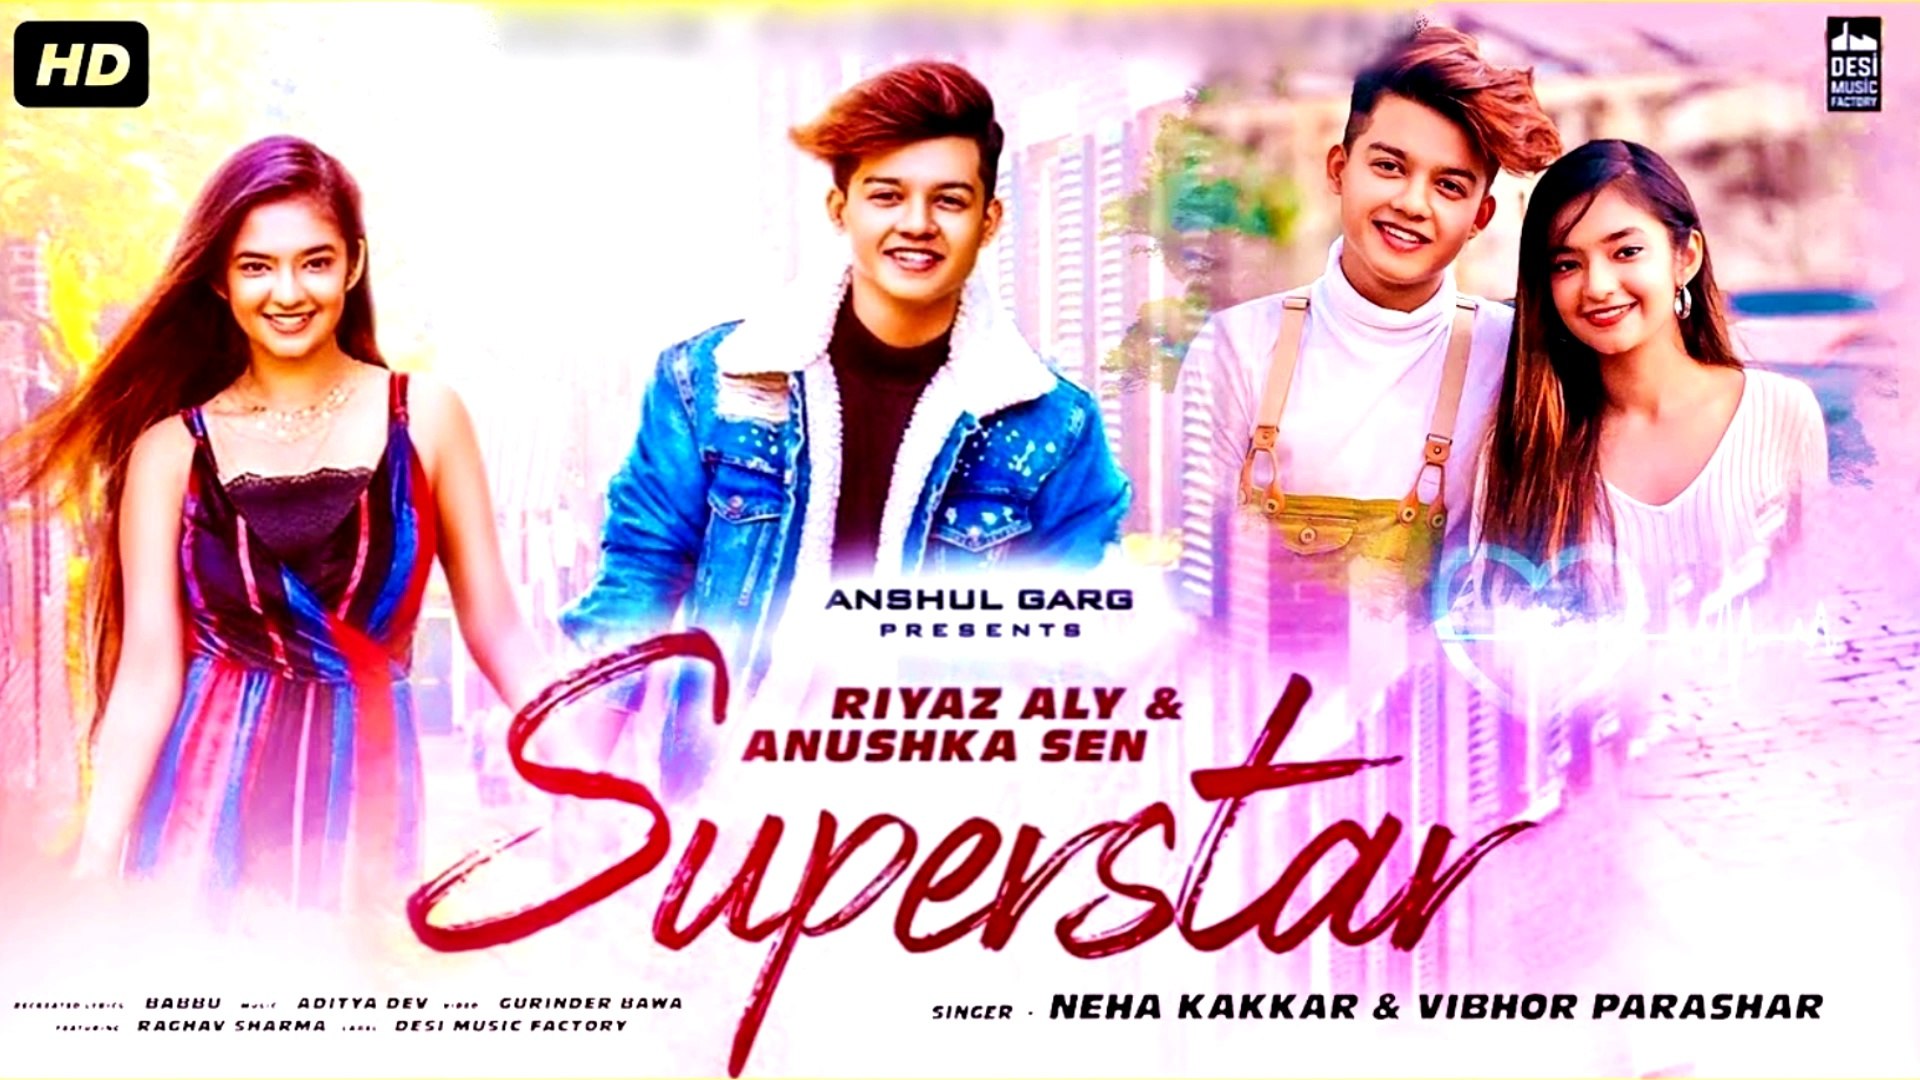 Superstar Video Song : Neha Kakkar | Riyaz Aly, Anushka Sen | New Song 2019 | New Song Hindi Dj 2020